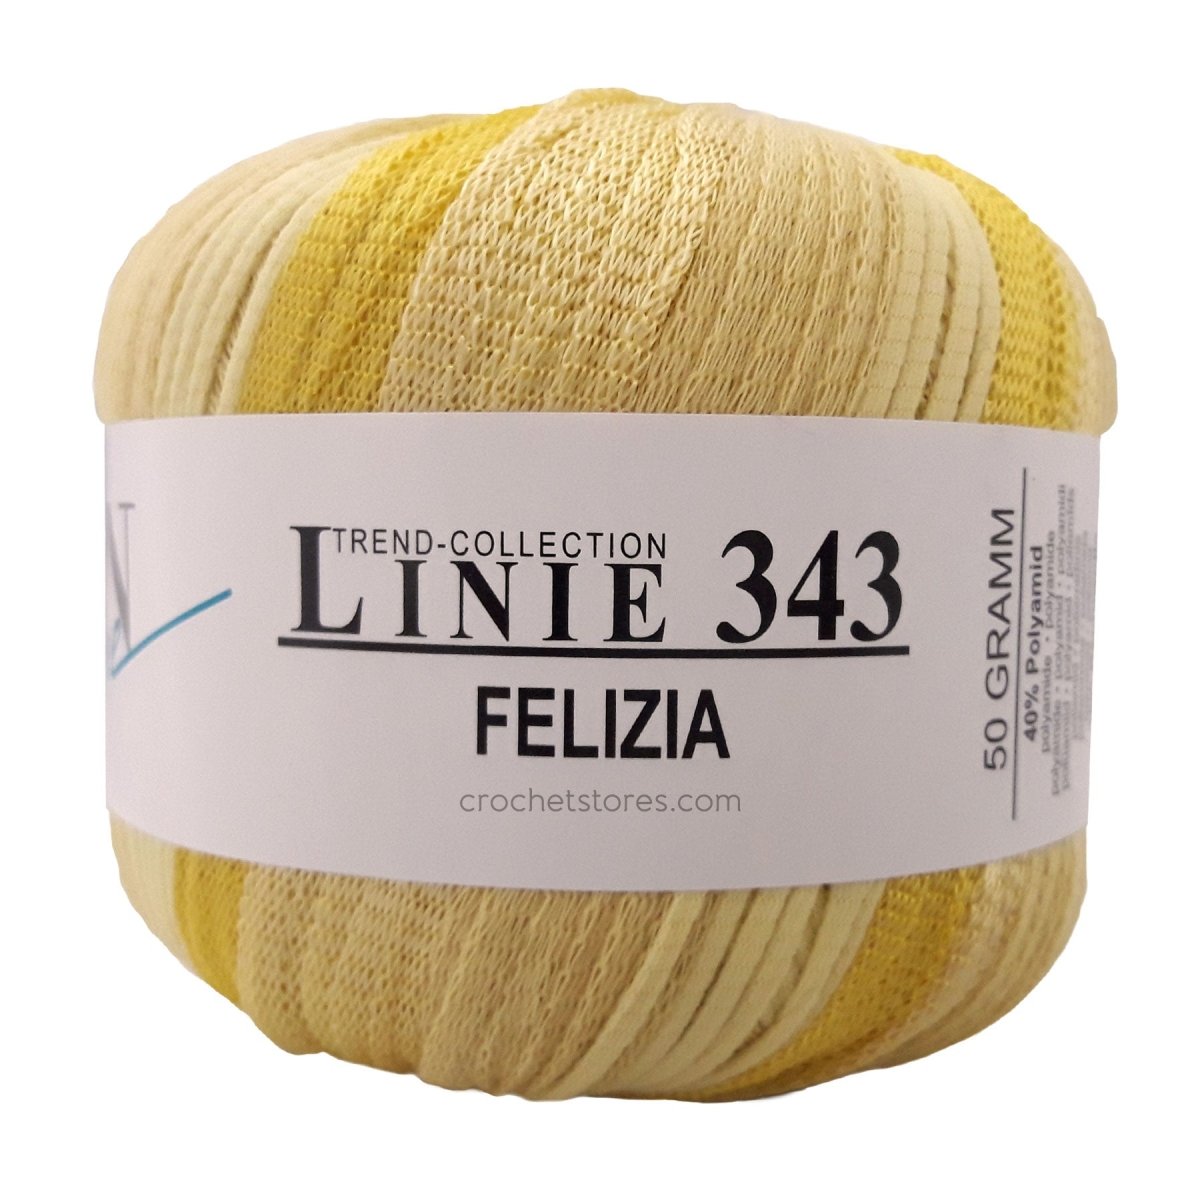 FELIZIA - Crochetstores110343-054014366146766